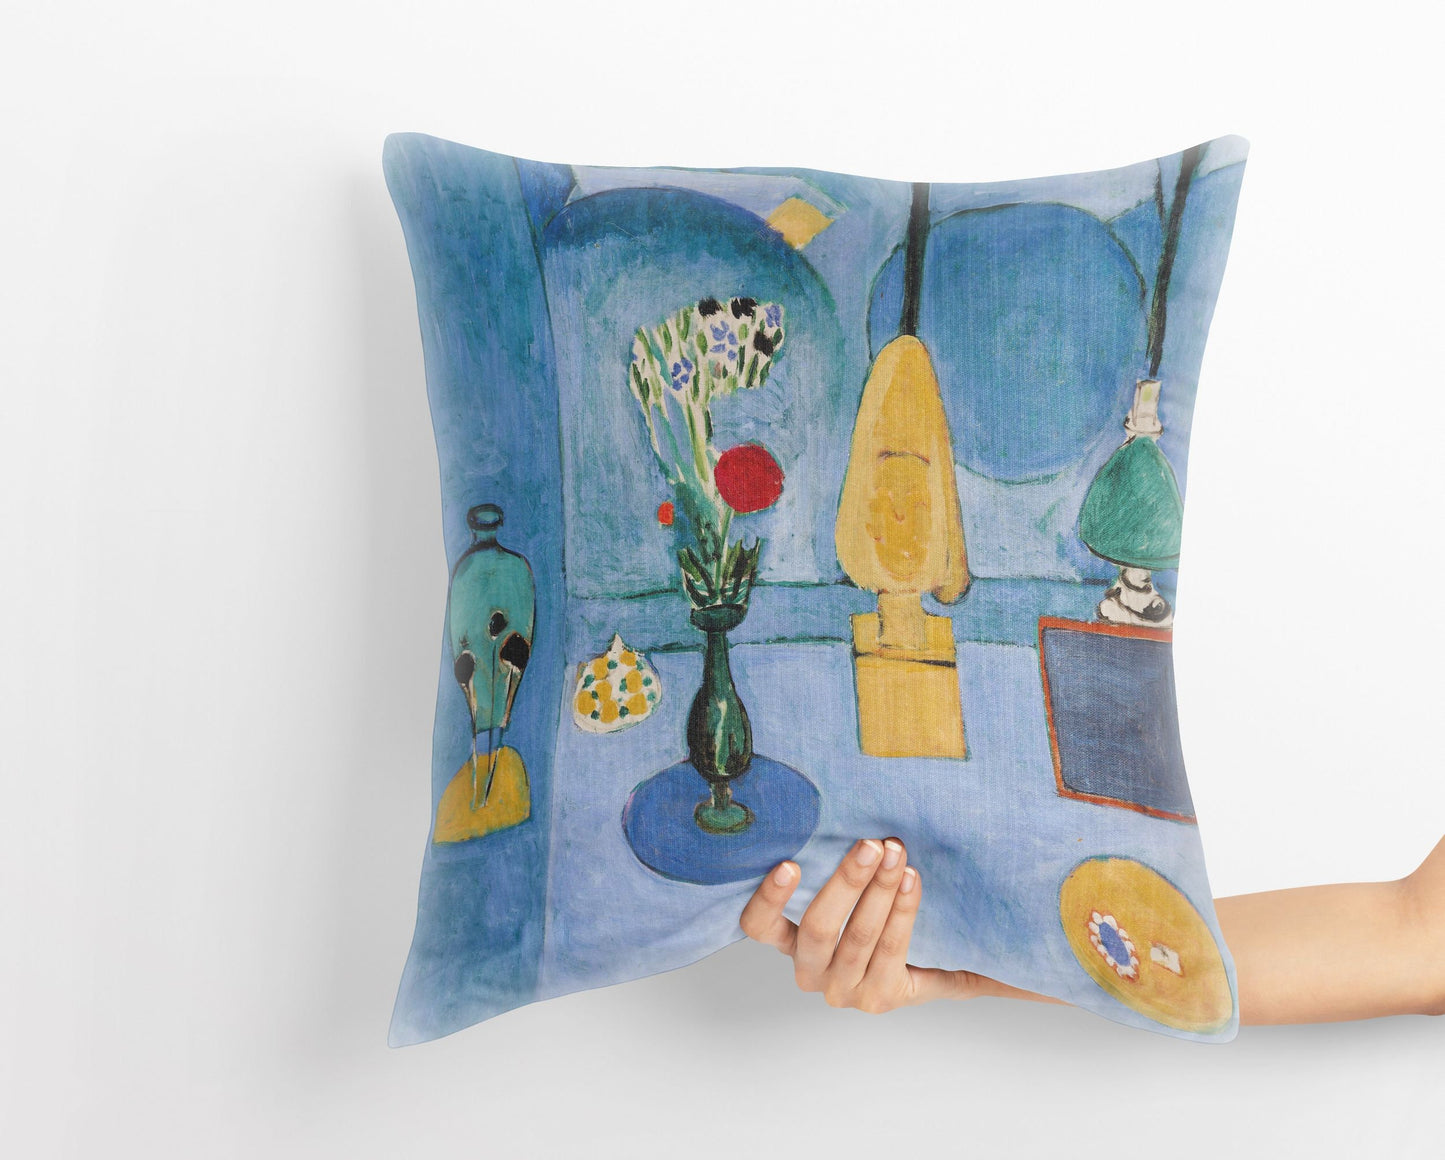 Henri Matisse Famous Painting, Pillow Case, Abstract Throw Pillow, Artist Pillow, Square Pillow, Housewarming Gift, Pillow Cases Kids